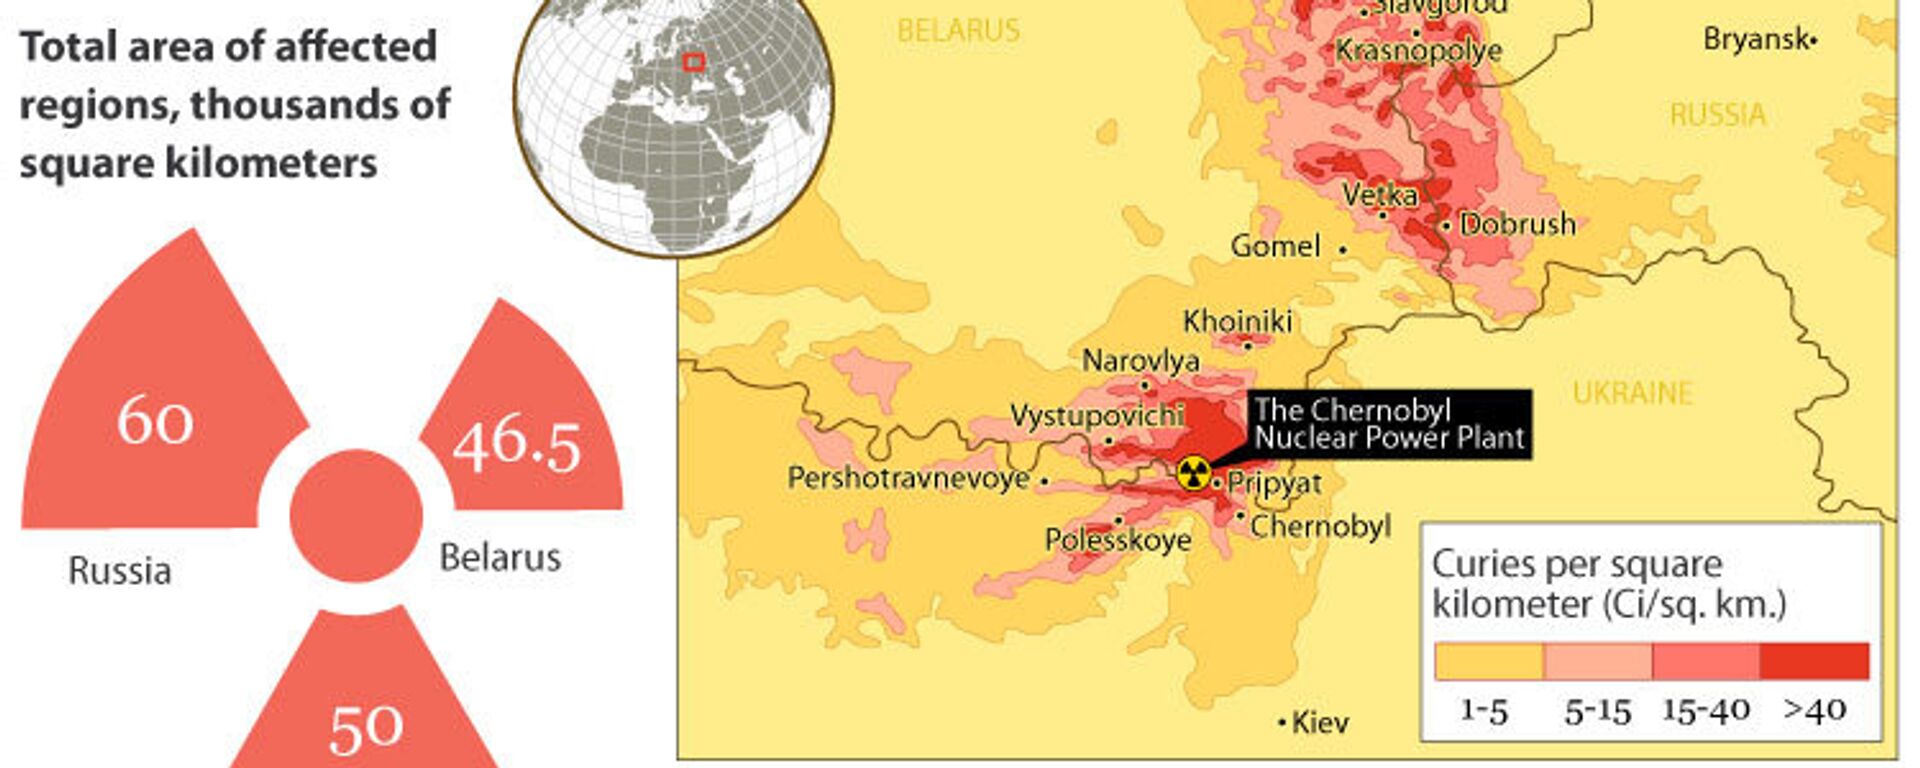 Aftermath of the Chernobyl disaster - Sputnik International, 1920, 27.04.2011